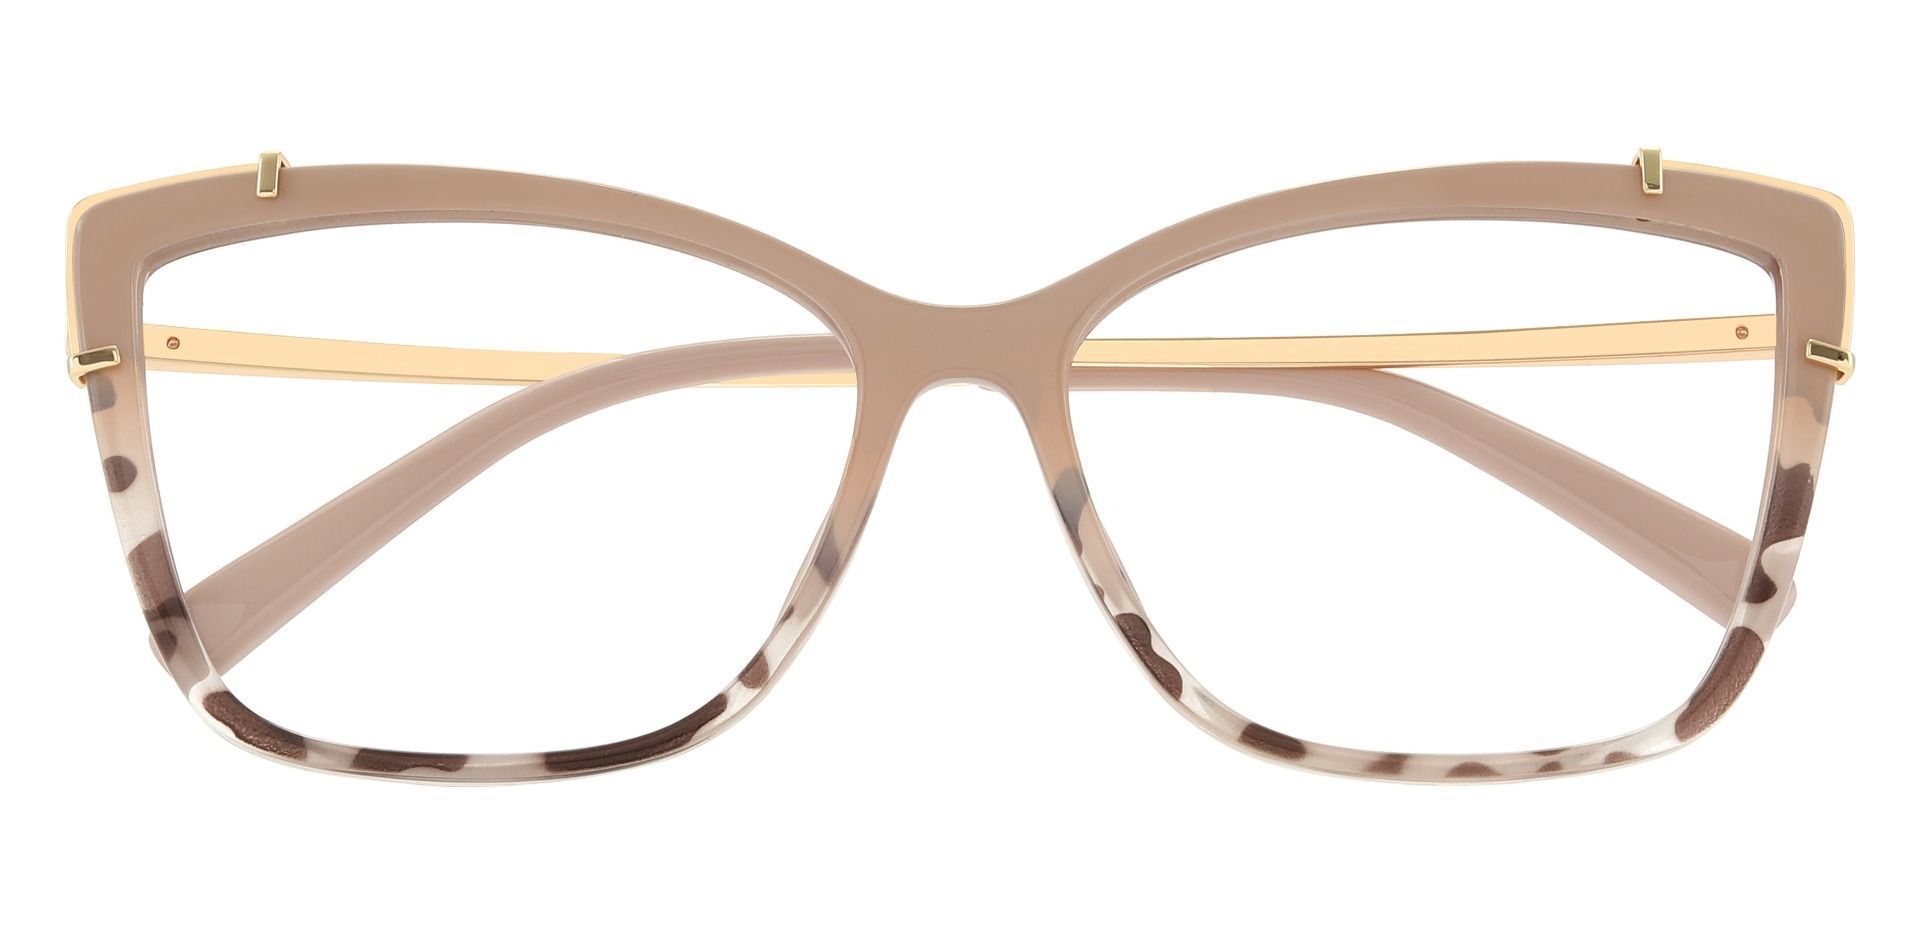 Hestia Cat Eye Prescription Glasses - Two